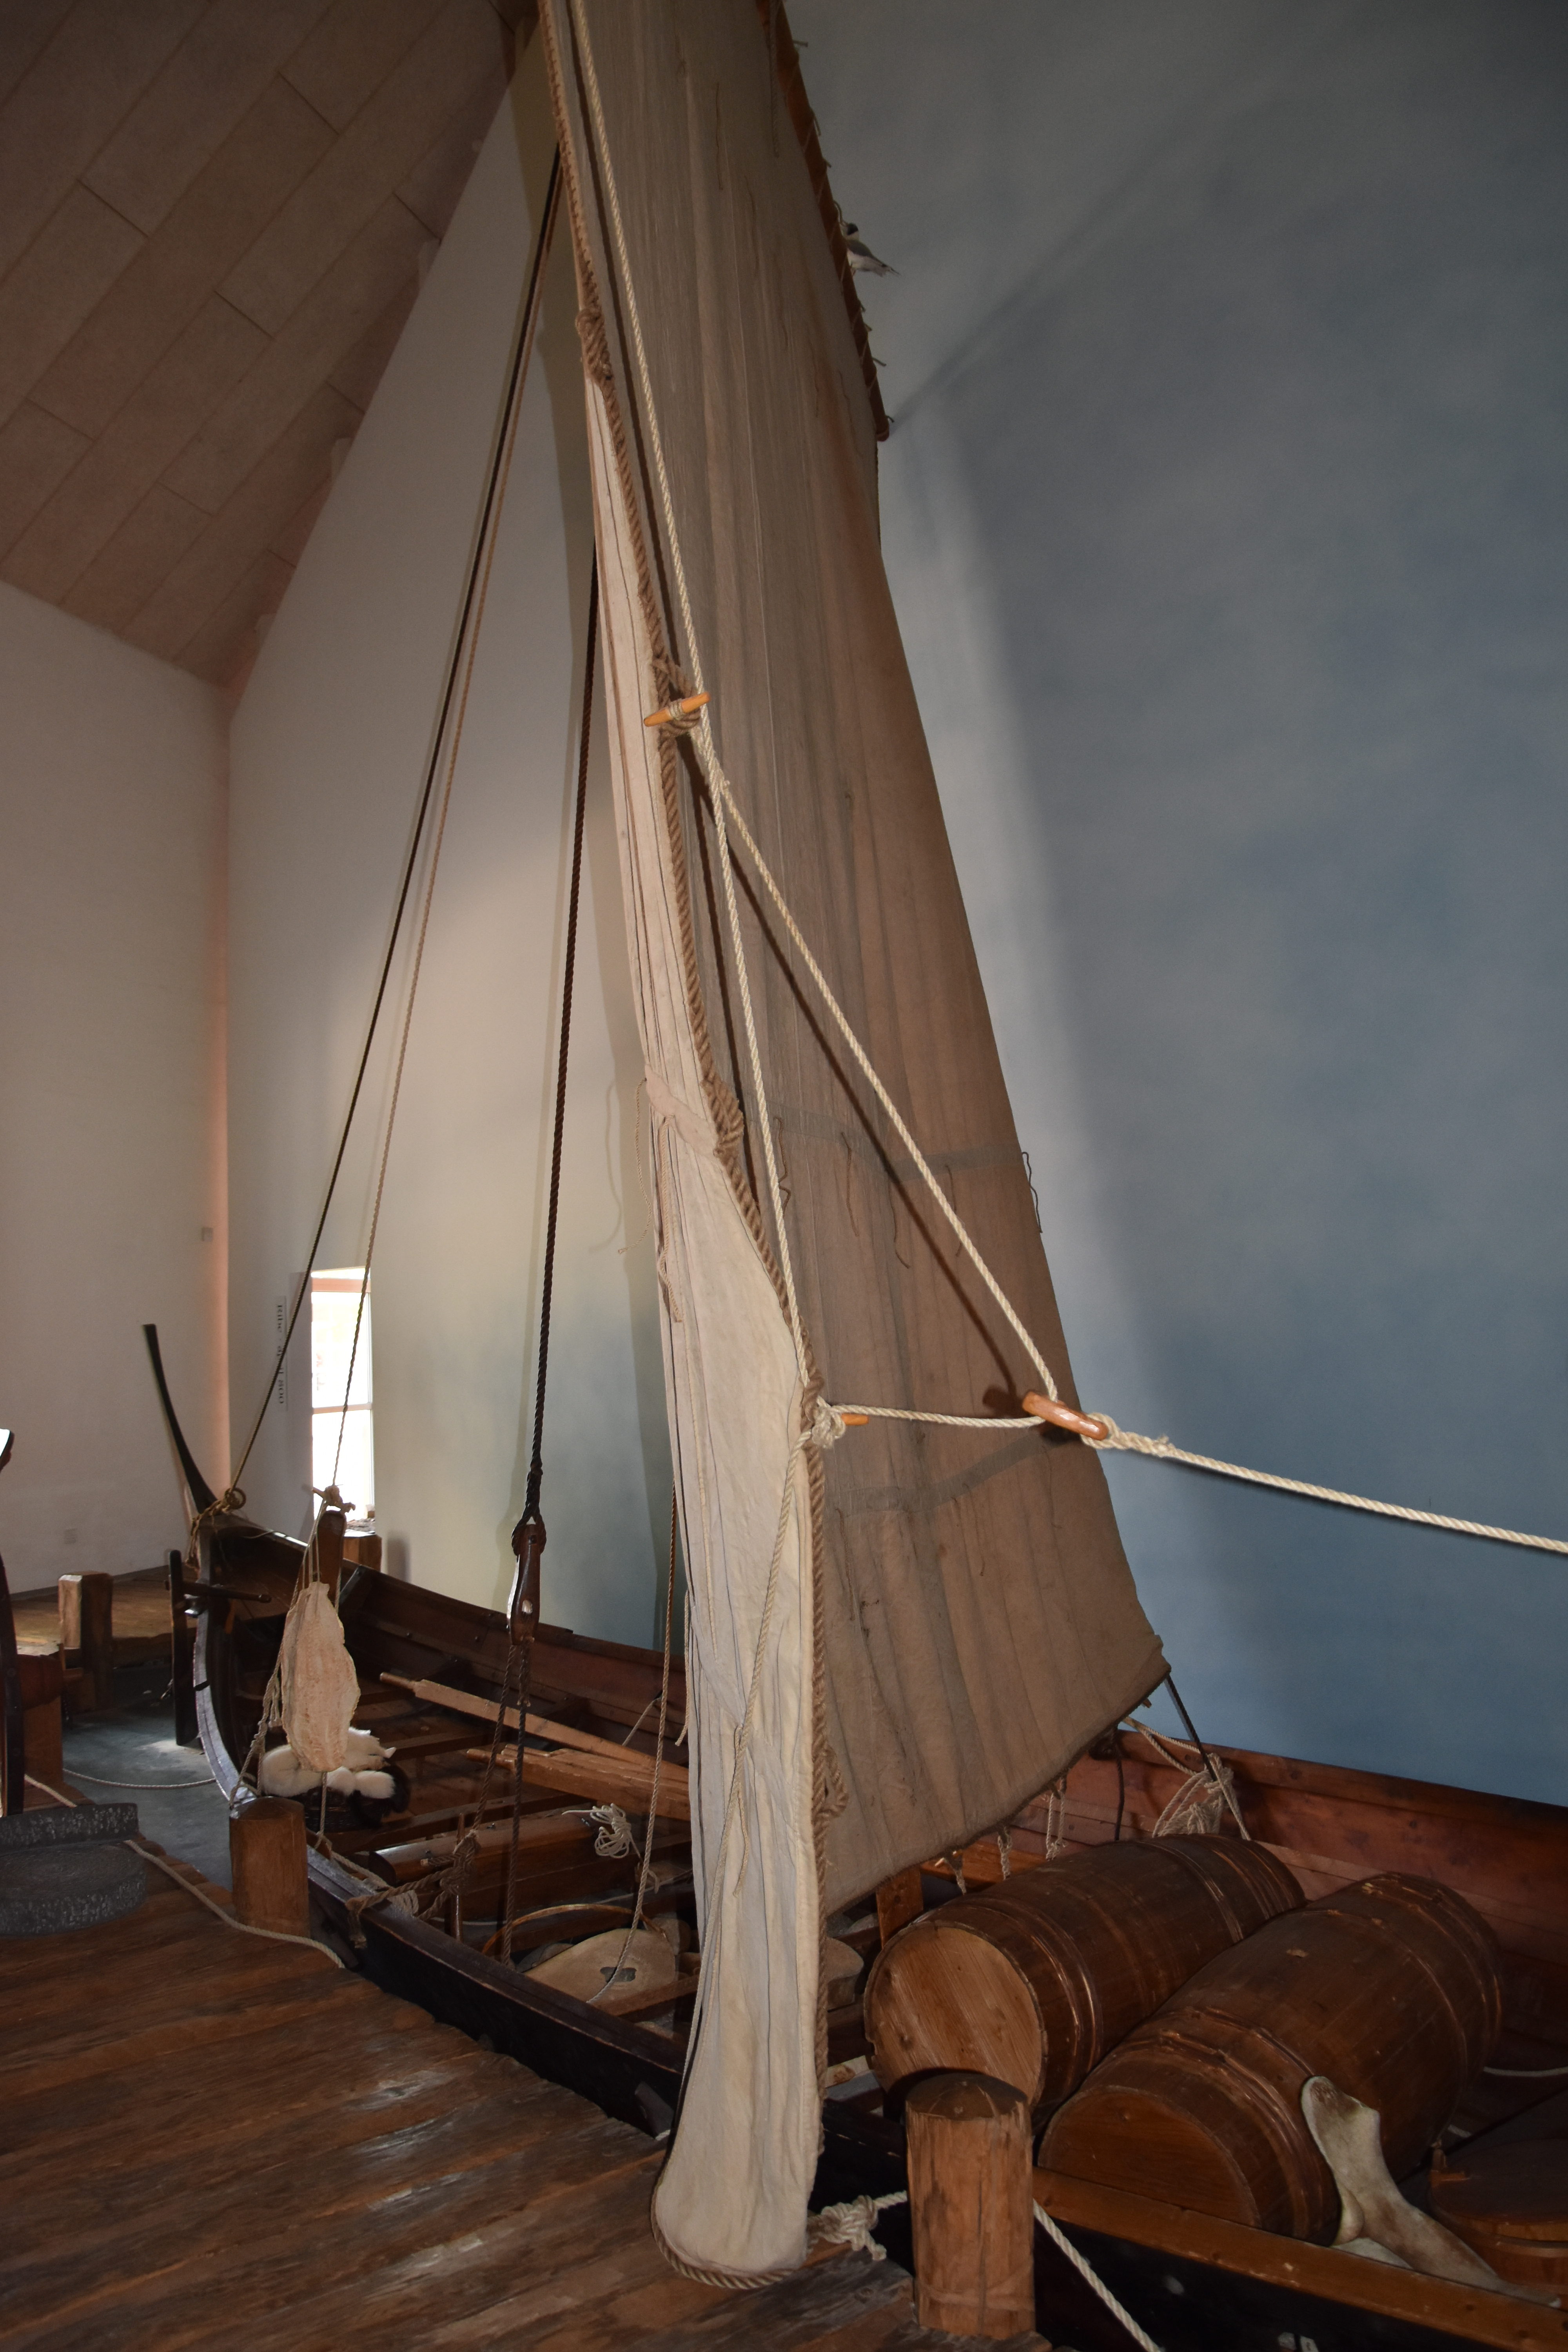 Display of an ancient ship at the Ribe Viking Museum in Ribe, Denmark